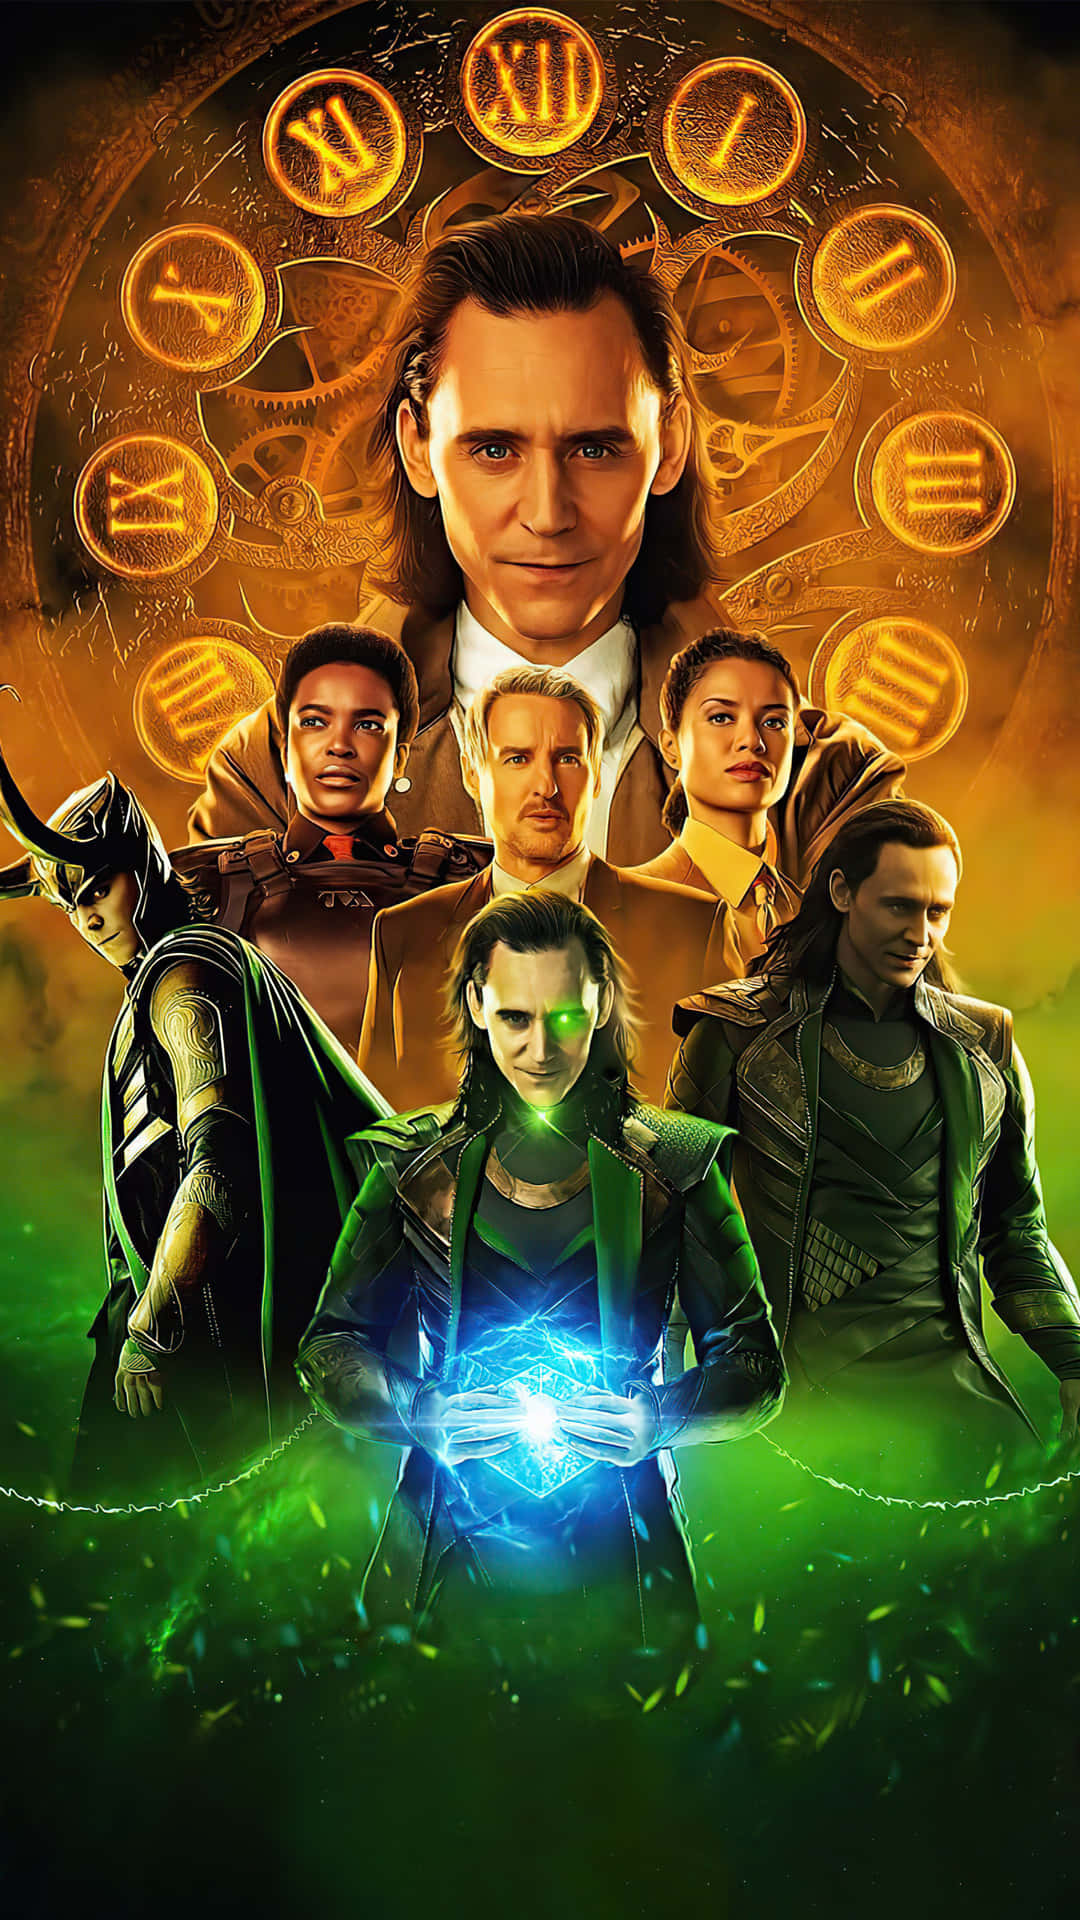 The God of Mischief - Loki Wallpaper